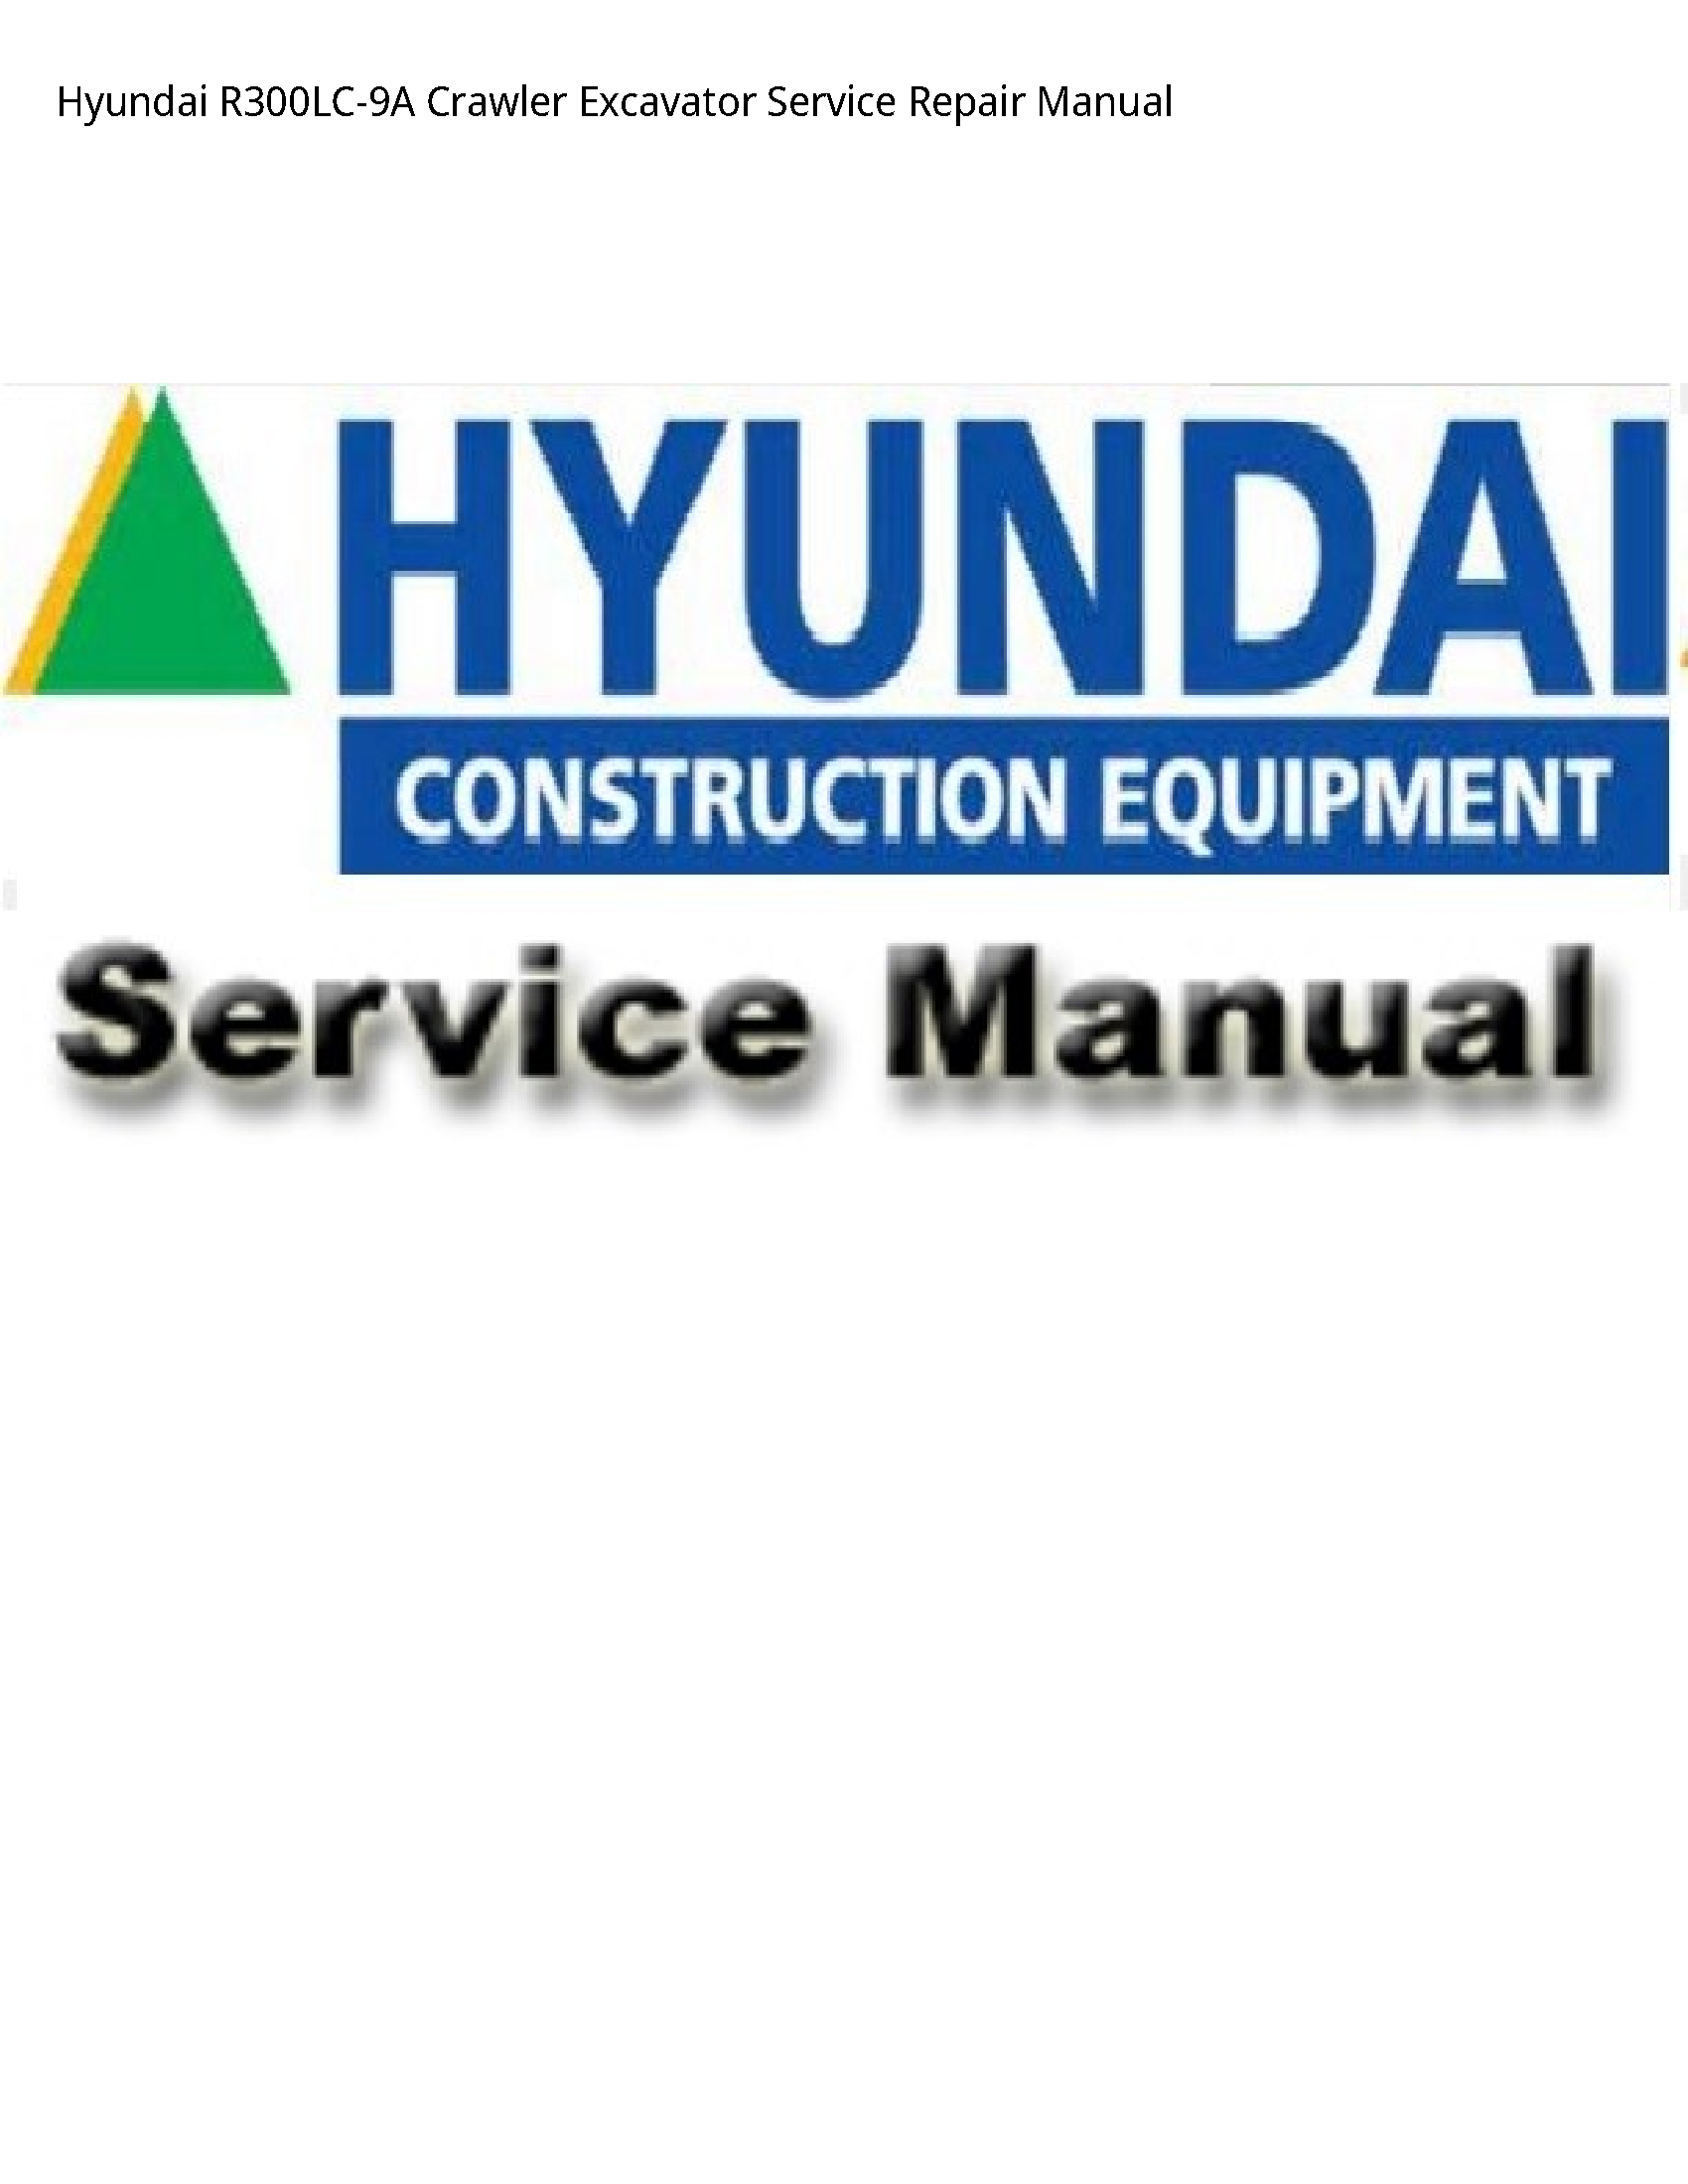 Hyundai R300LC-9A Crawler Excavator manual